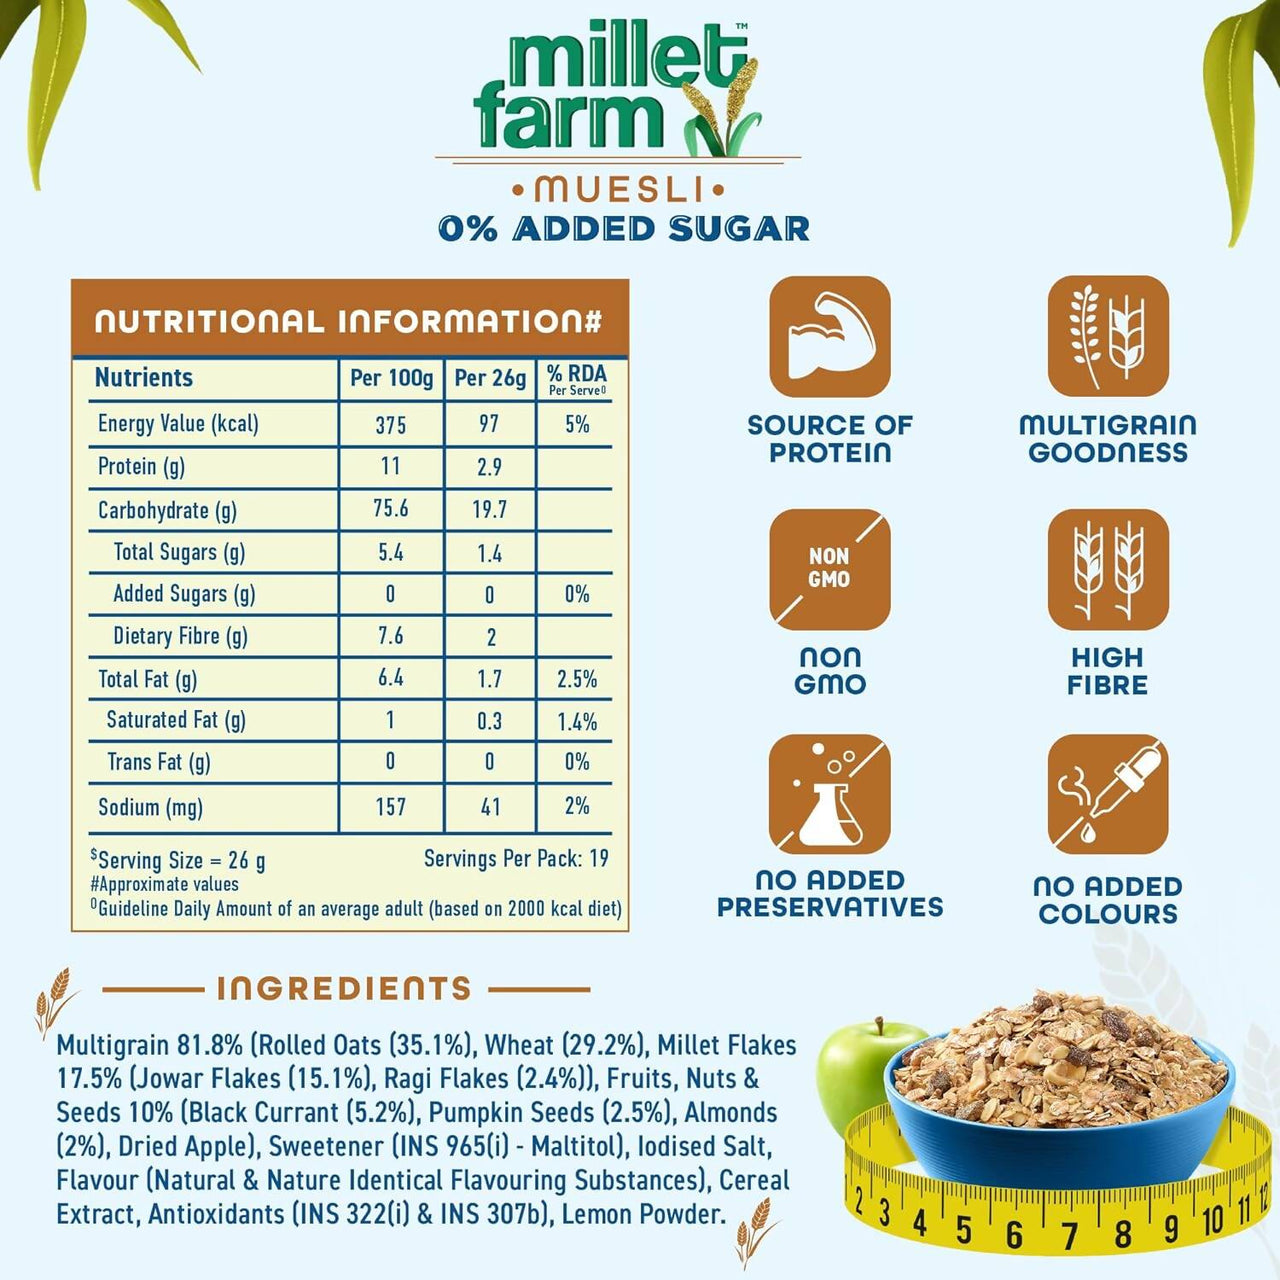 Bagrry's Millet Farm Muesli 0% Added Sugar with Jowar and Ragi - Distacart